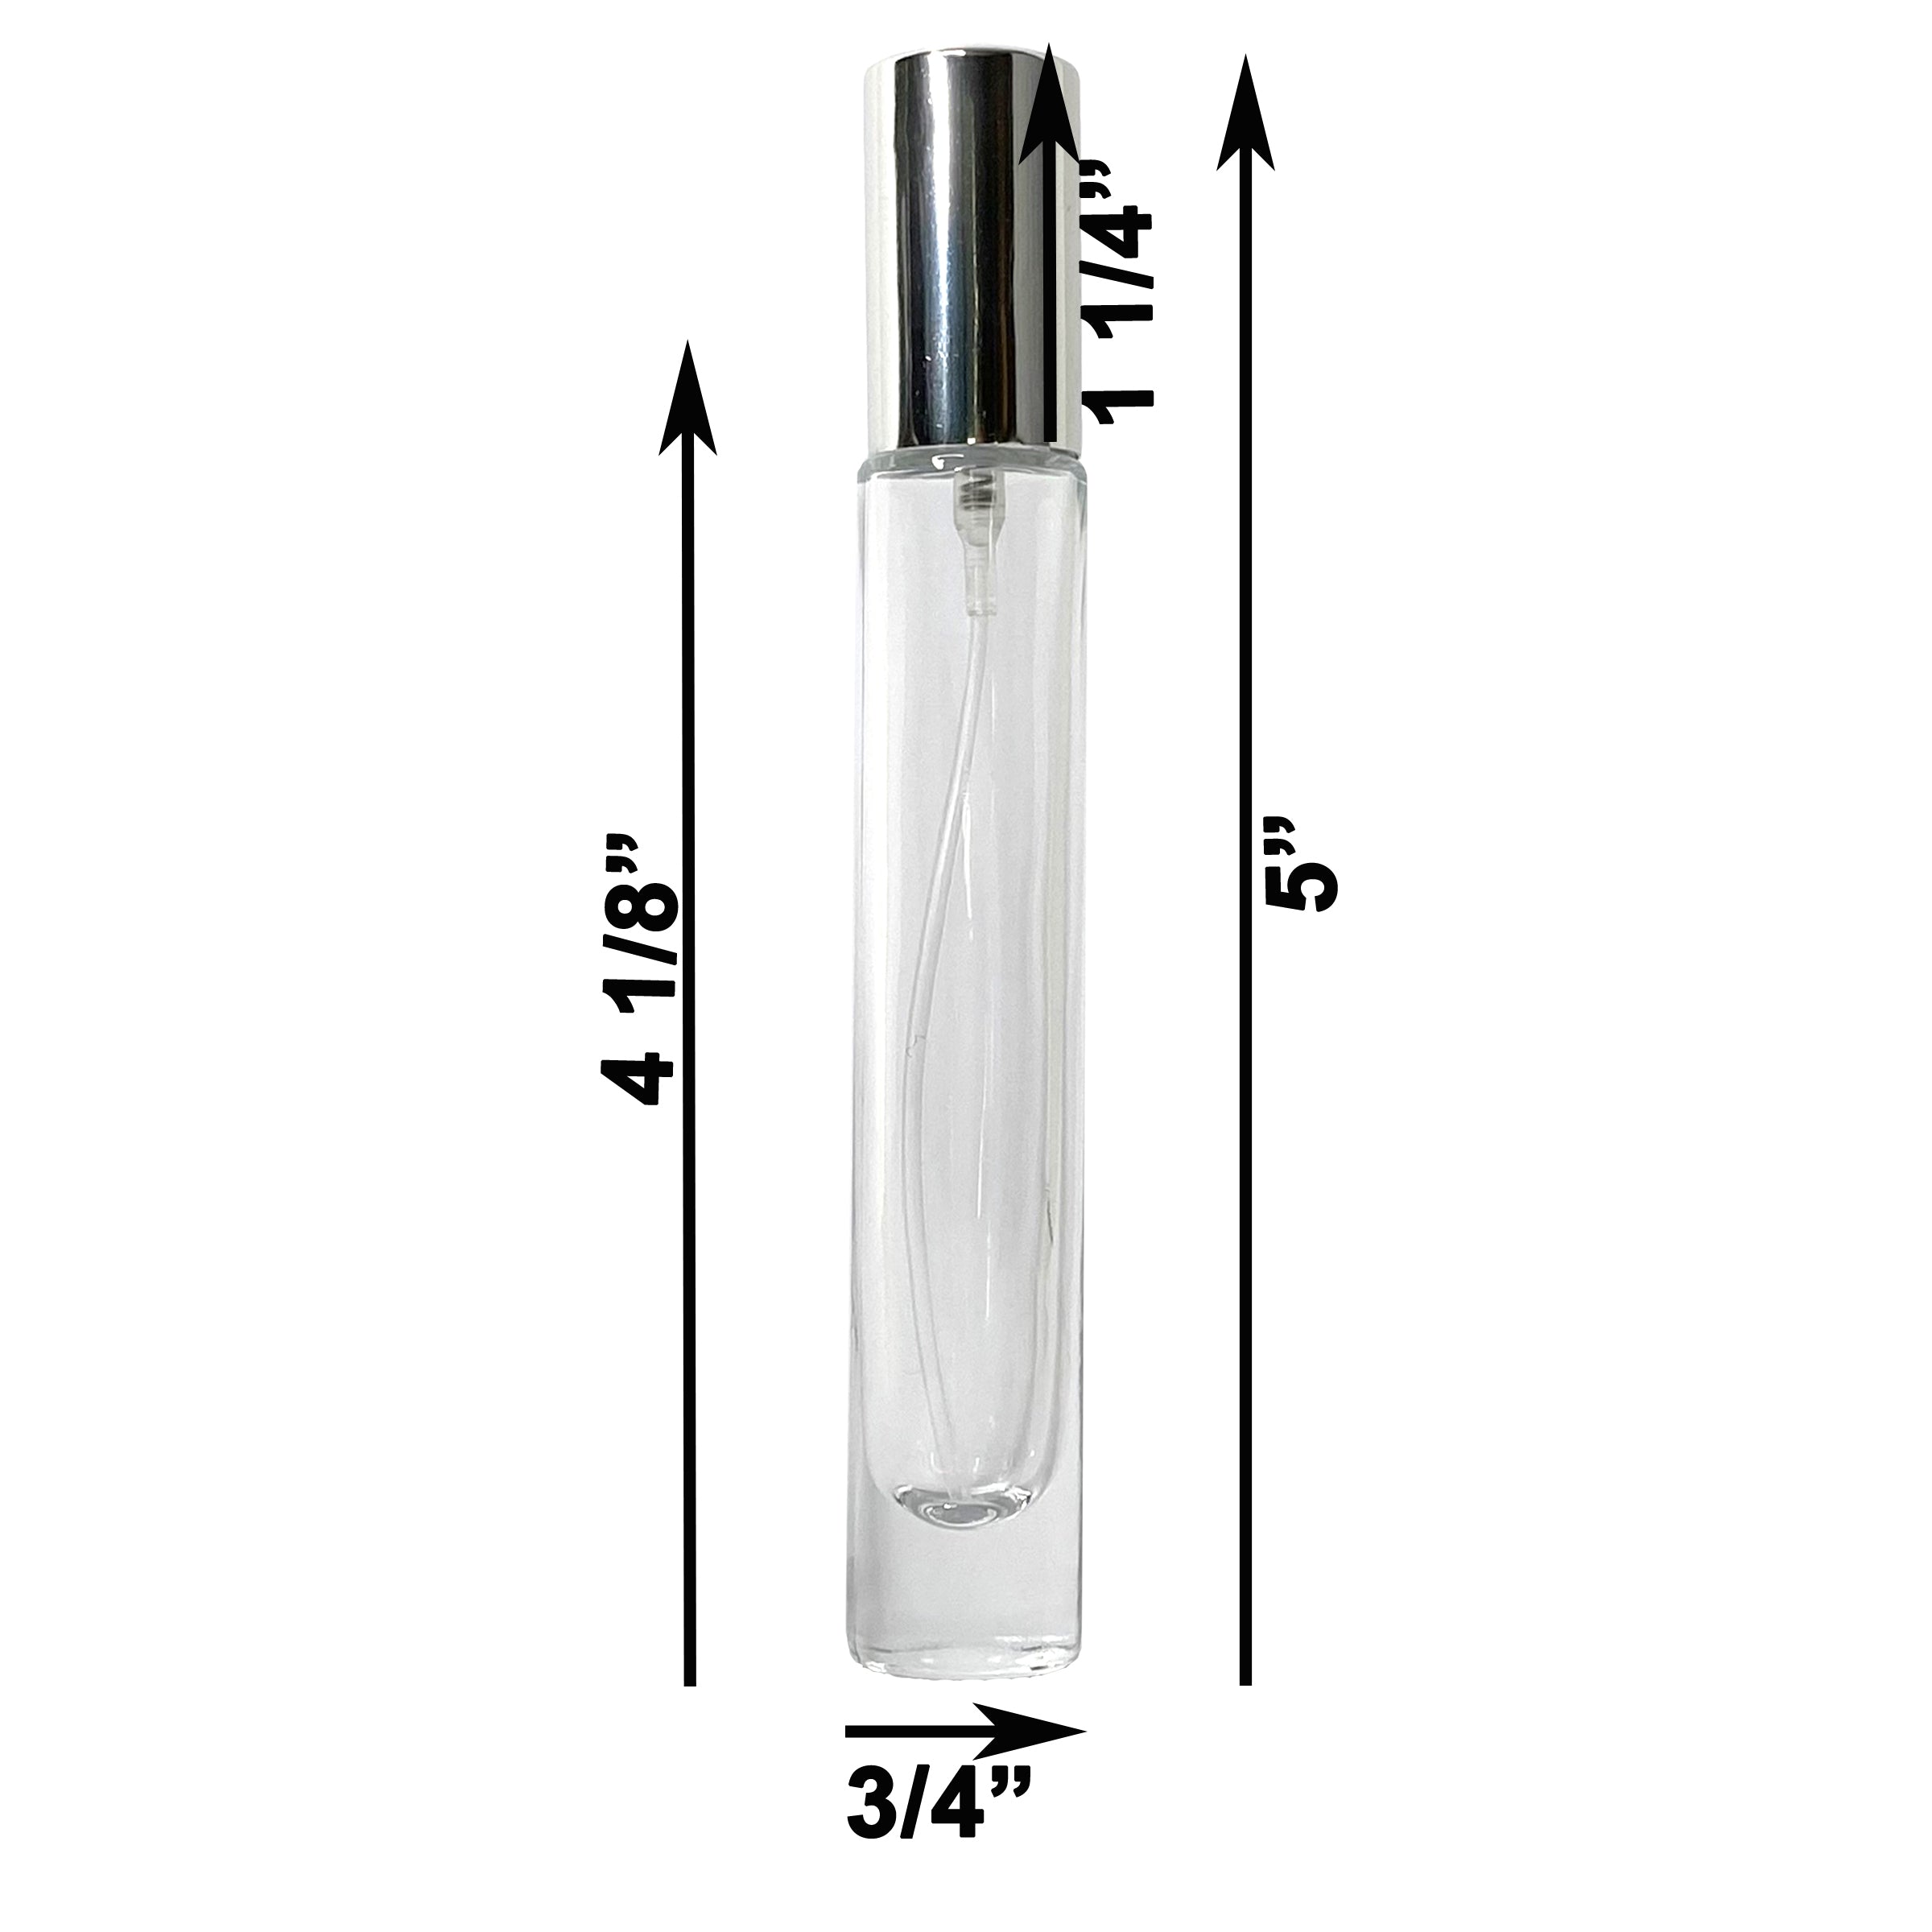 10ml 0.33oz Perfume Glass Spray Bottles High Clear Atomizers 50